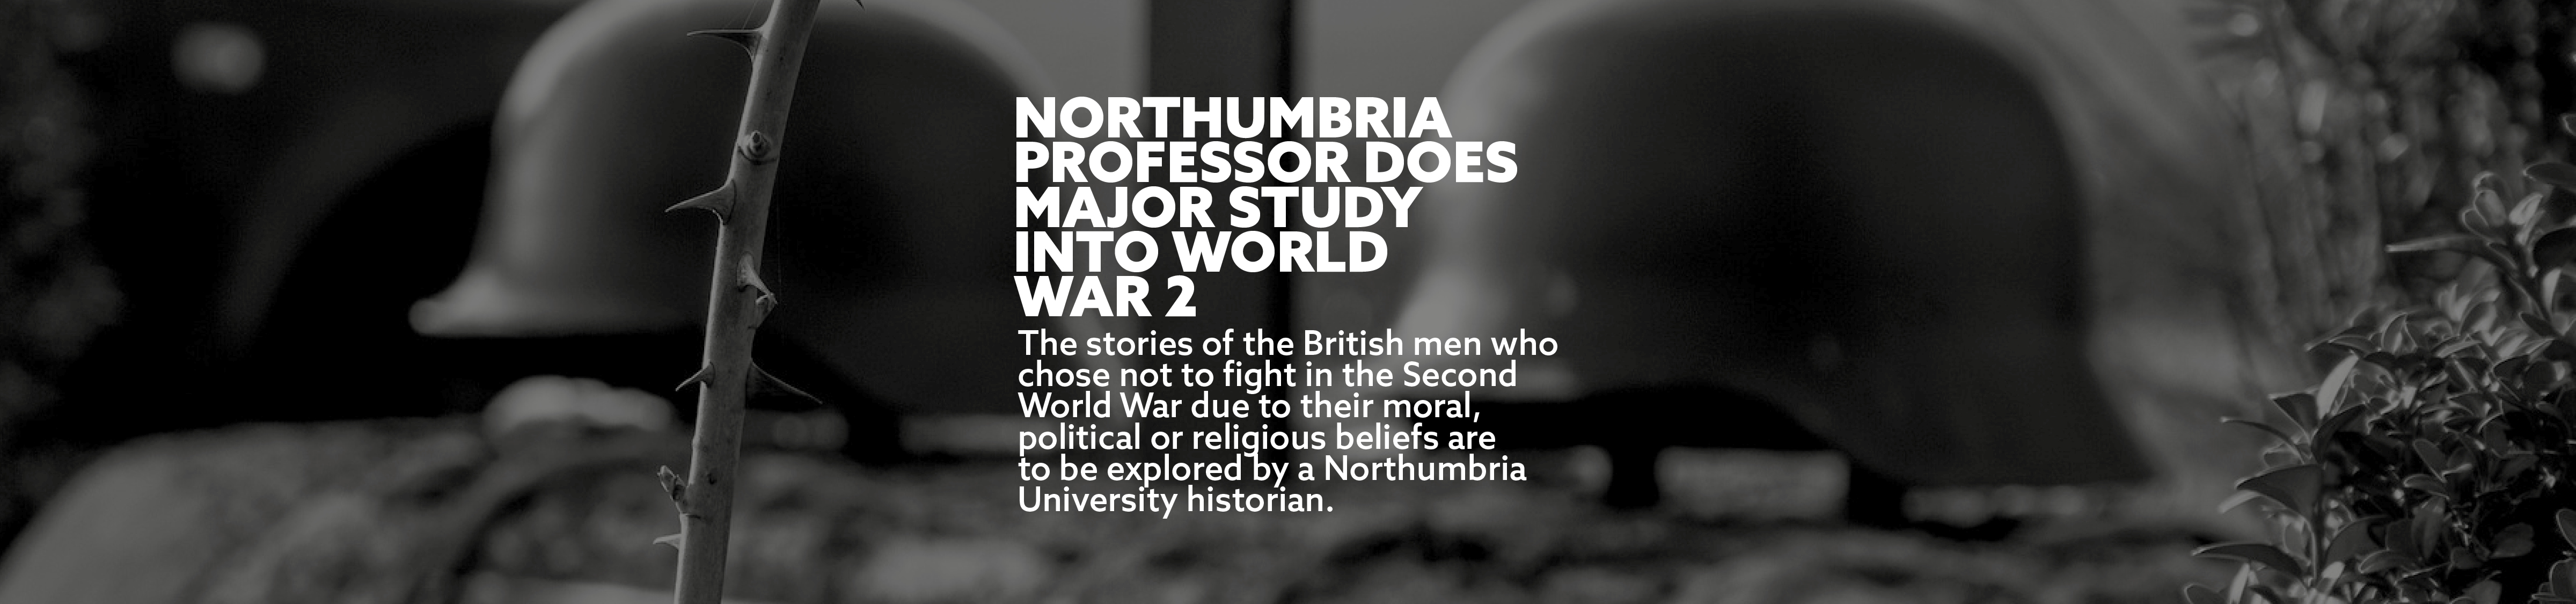 Northumbria professor does major study into world war 2